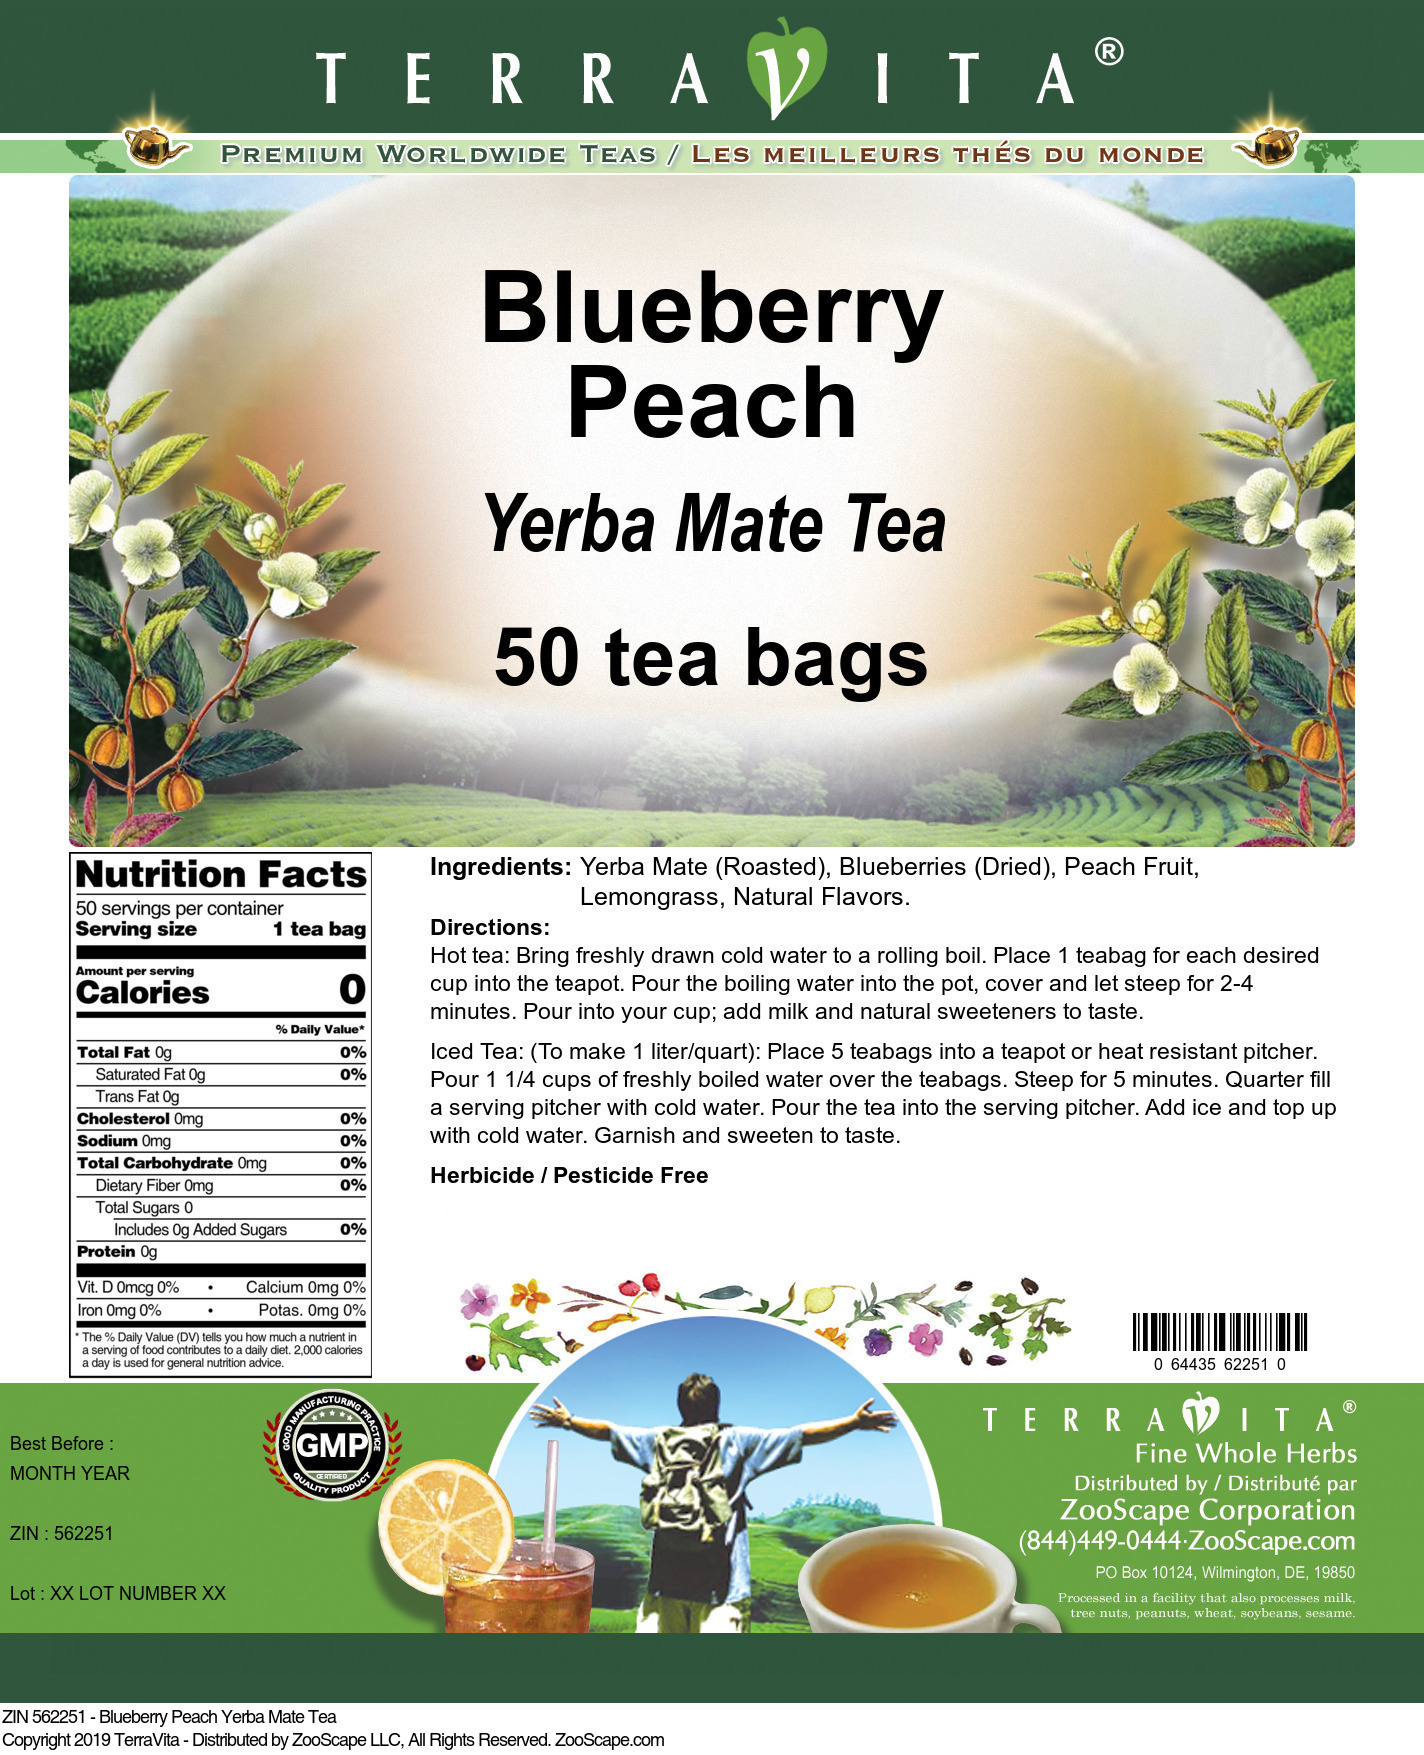 Blueberry Peach Yerba Mate Tea - Label